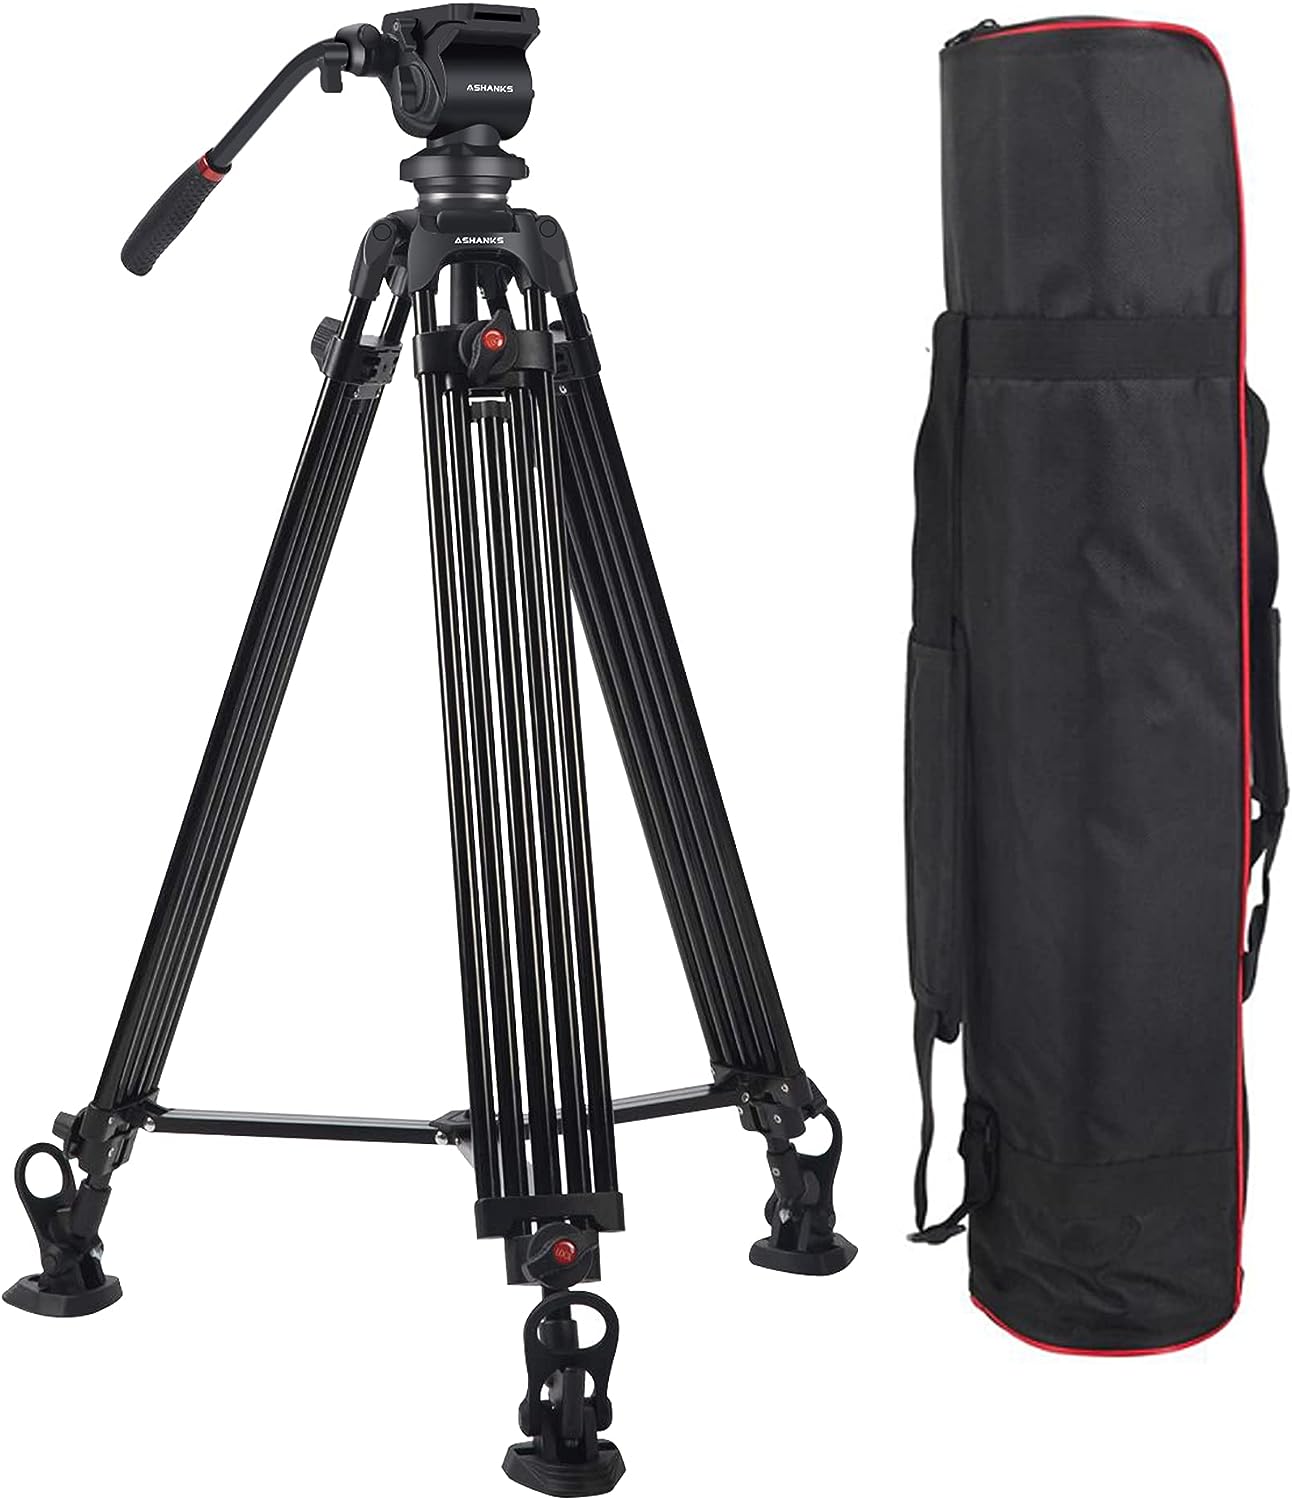 Professional Video Tripod for Camera, ASHANKS 74 Inch/190cm